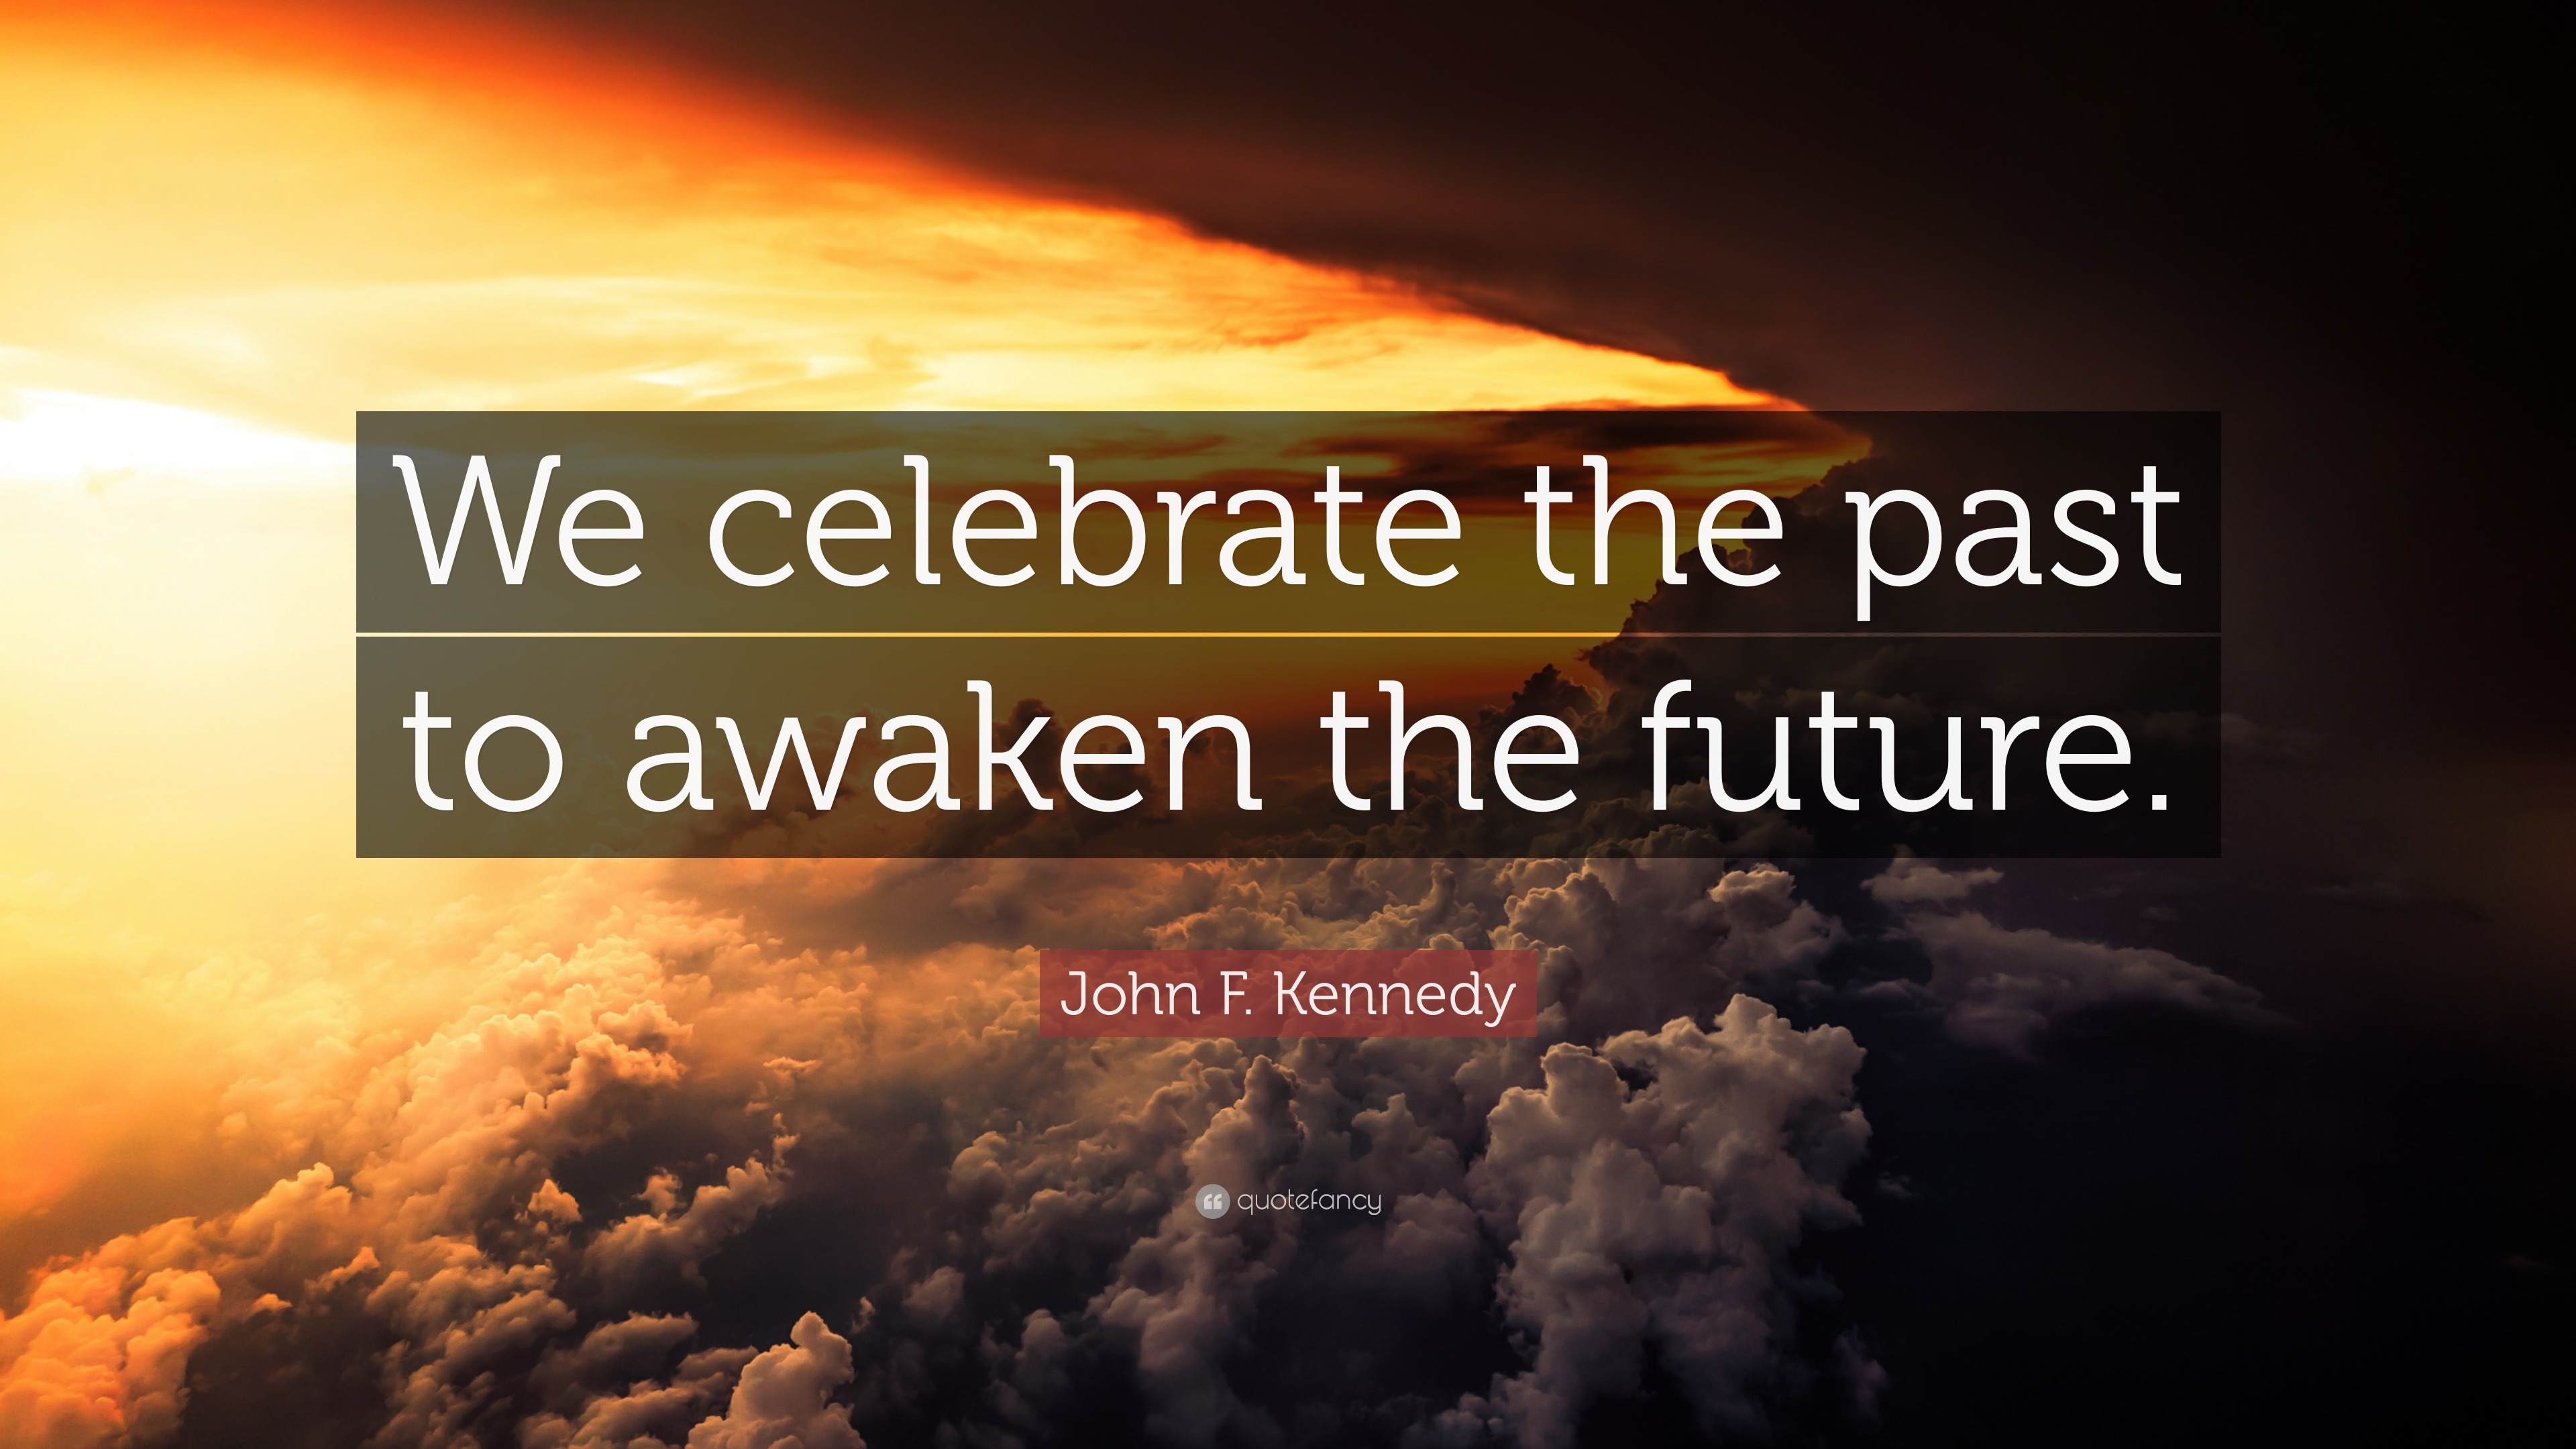 John F. Kennedy Quote: “We celebrate the past to awaken the future.”